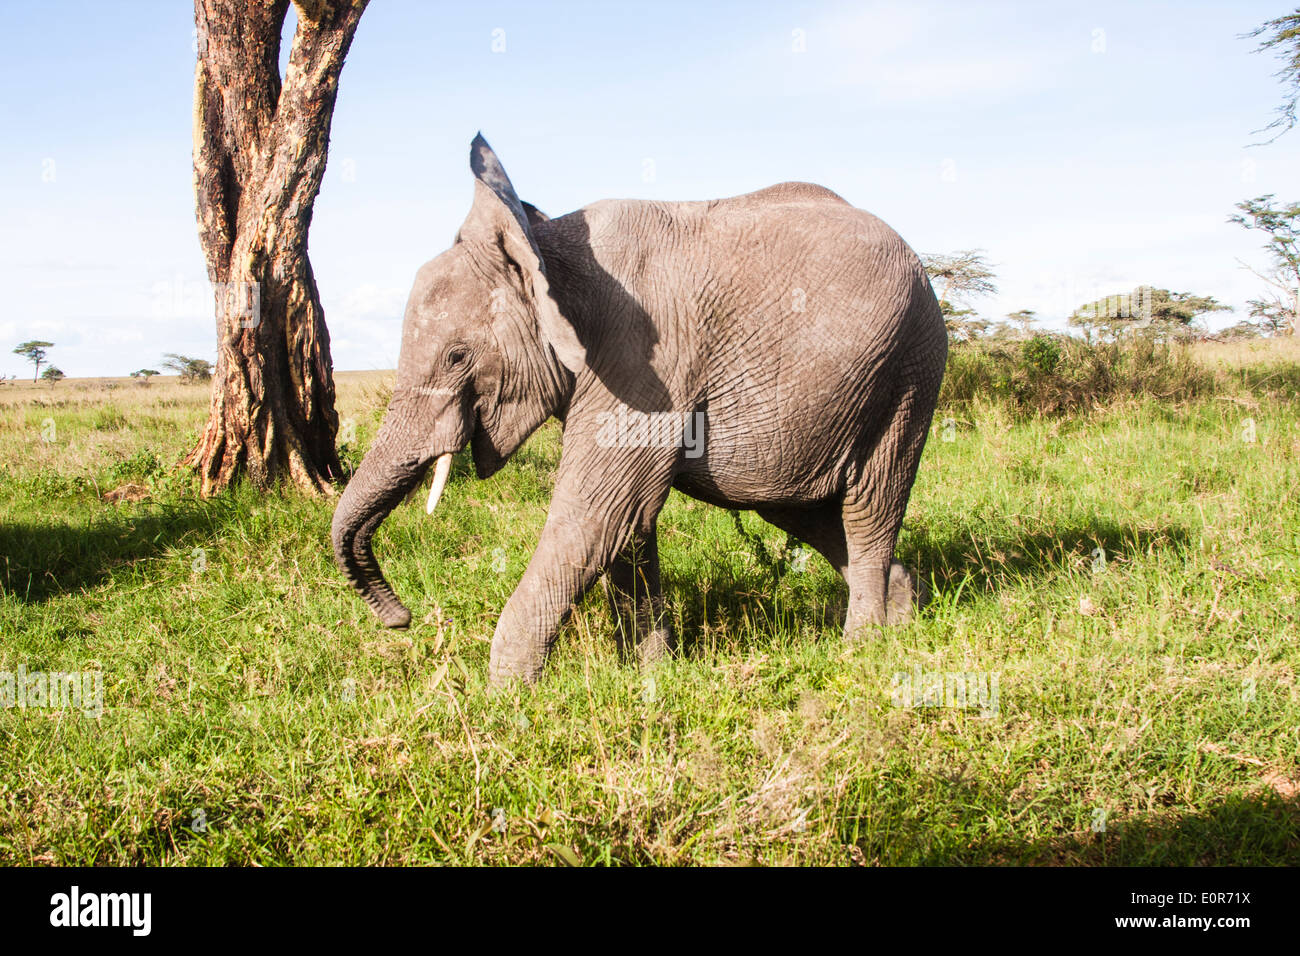 African bush elephant (Loxodonta africana). Photographed in Tanzania Stock Photo